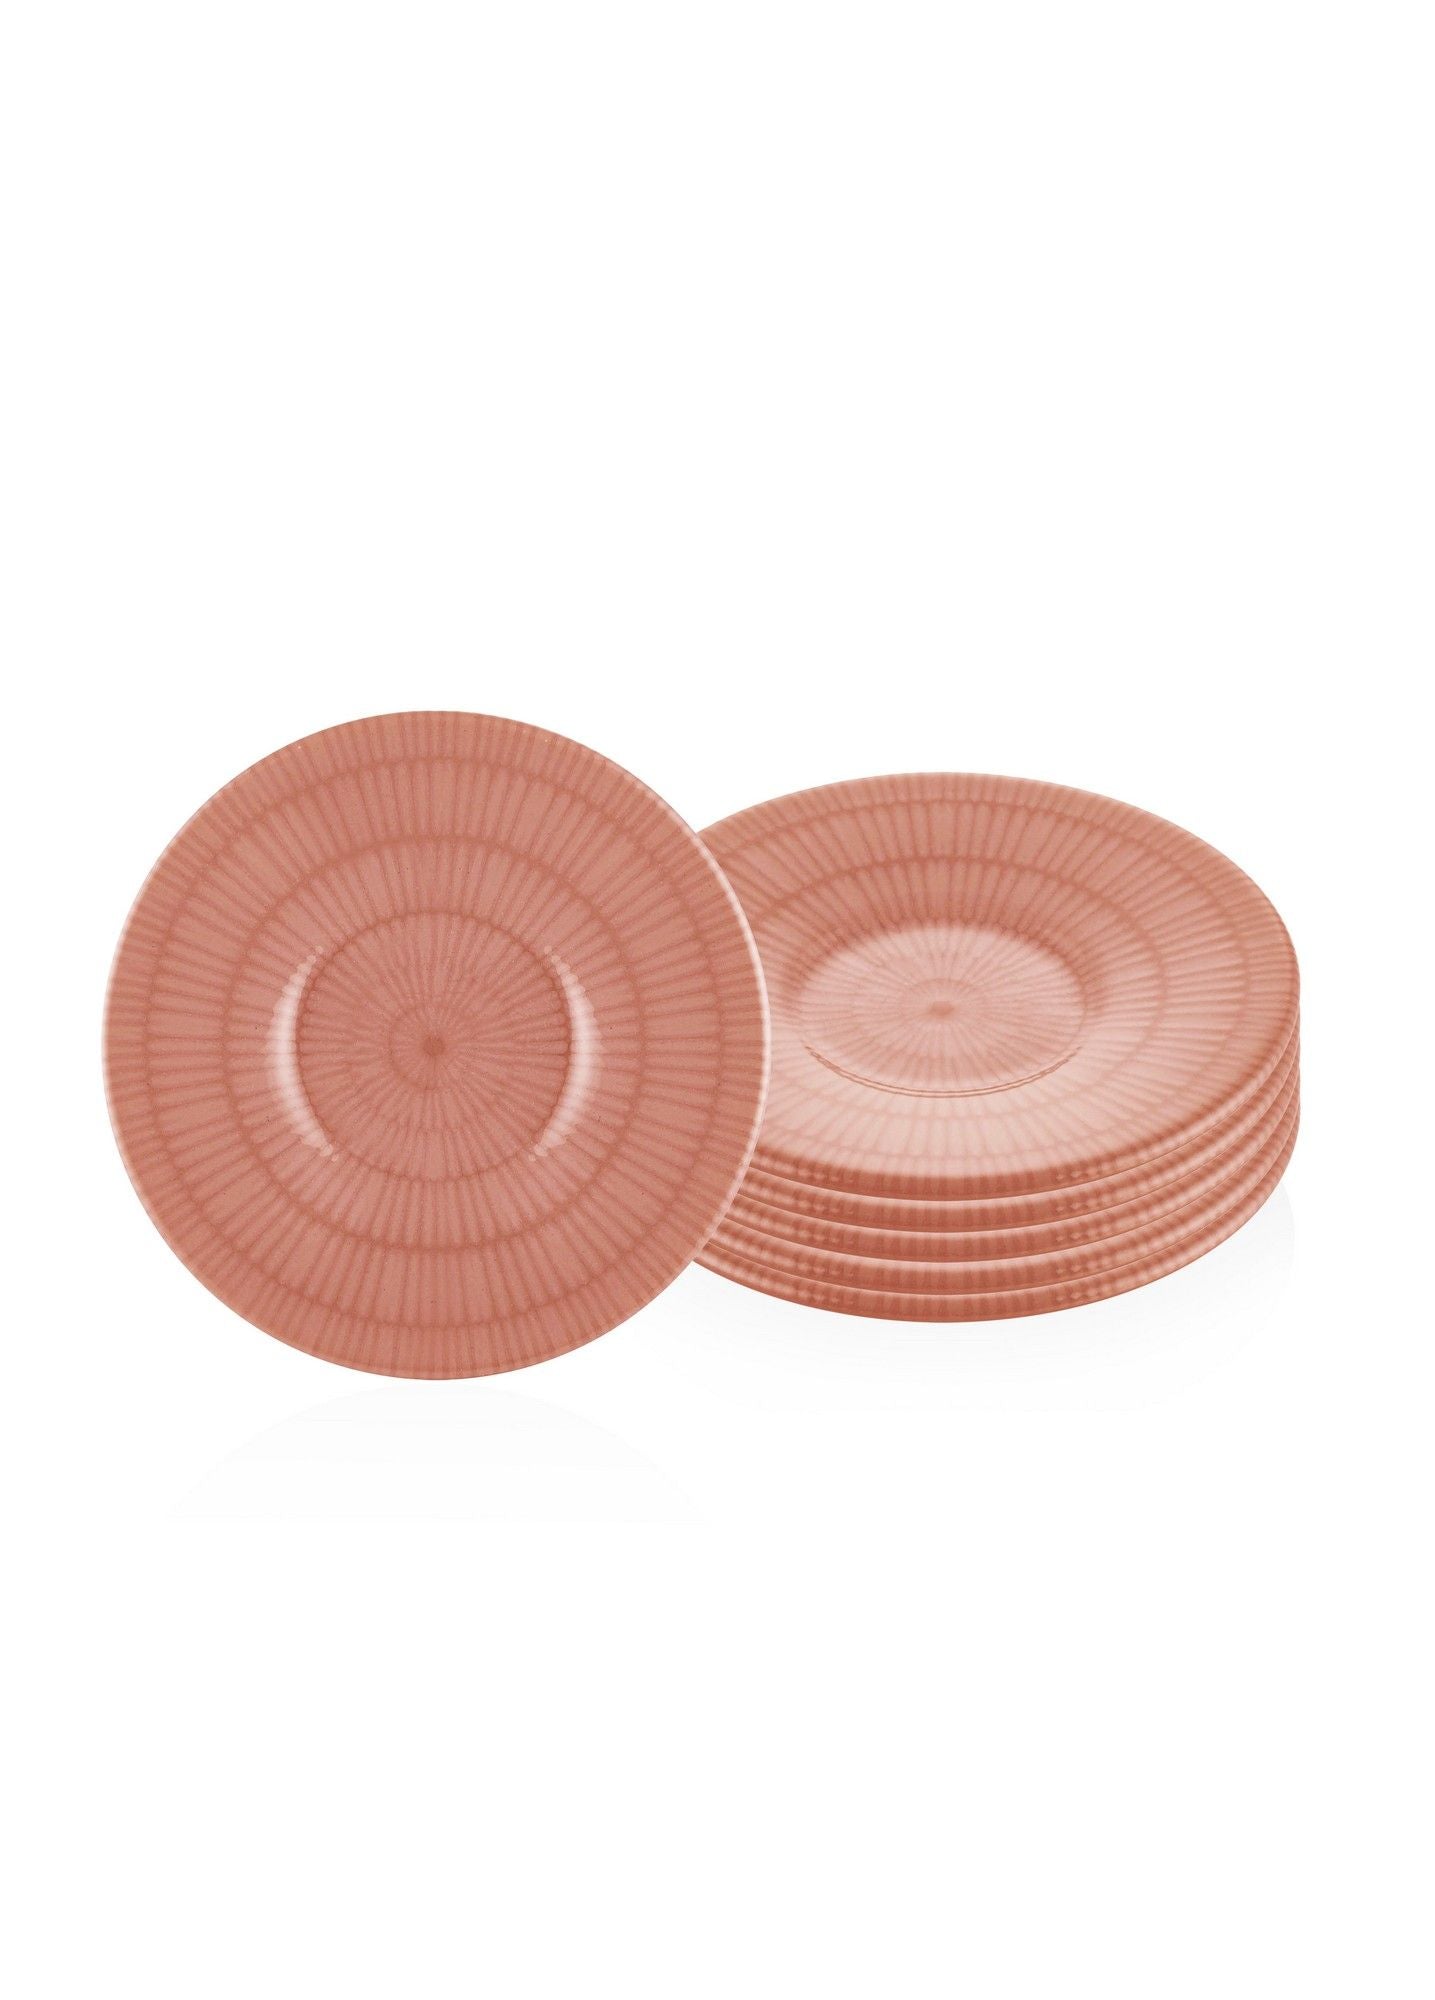 NON0037 - Ceramic Saucer Set (6 Pieces)